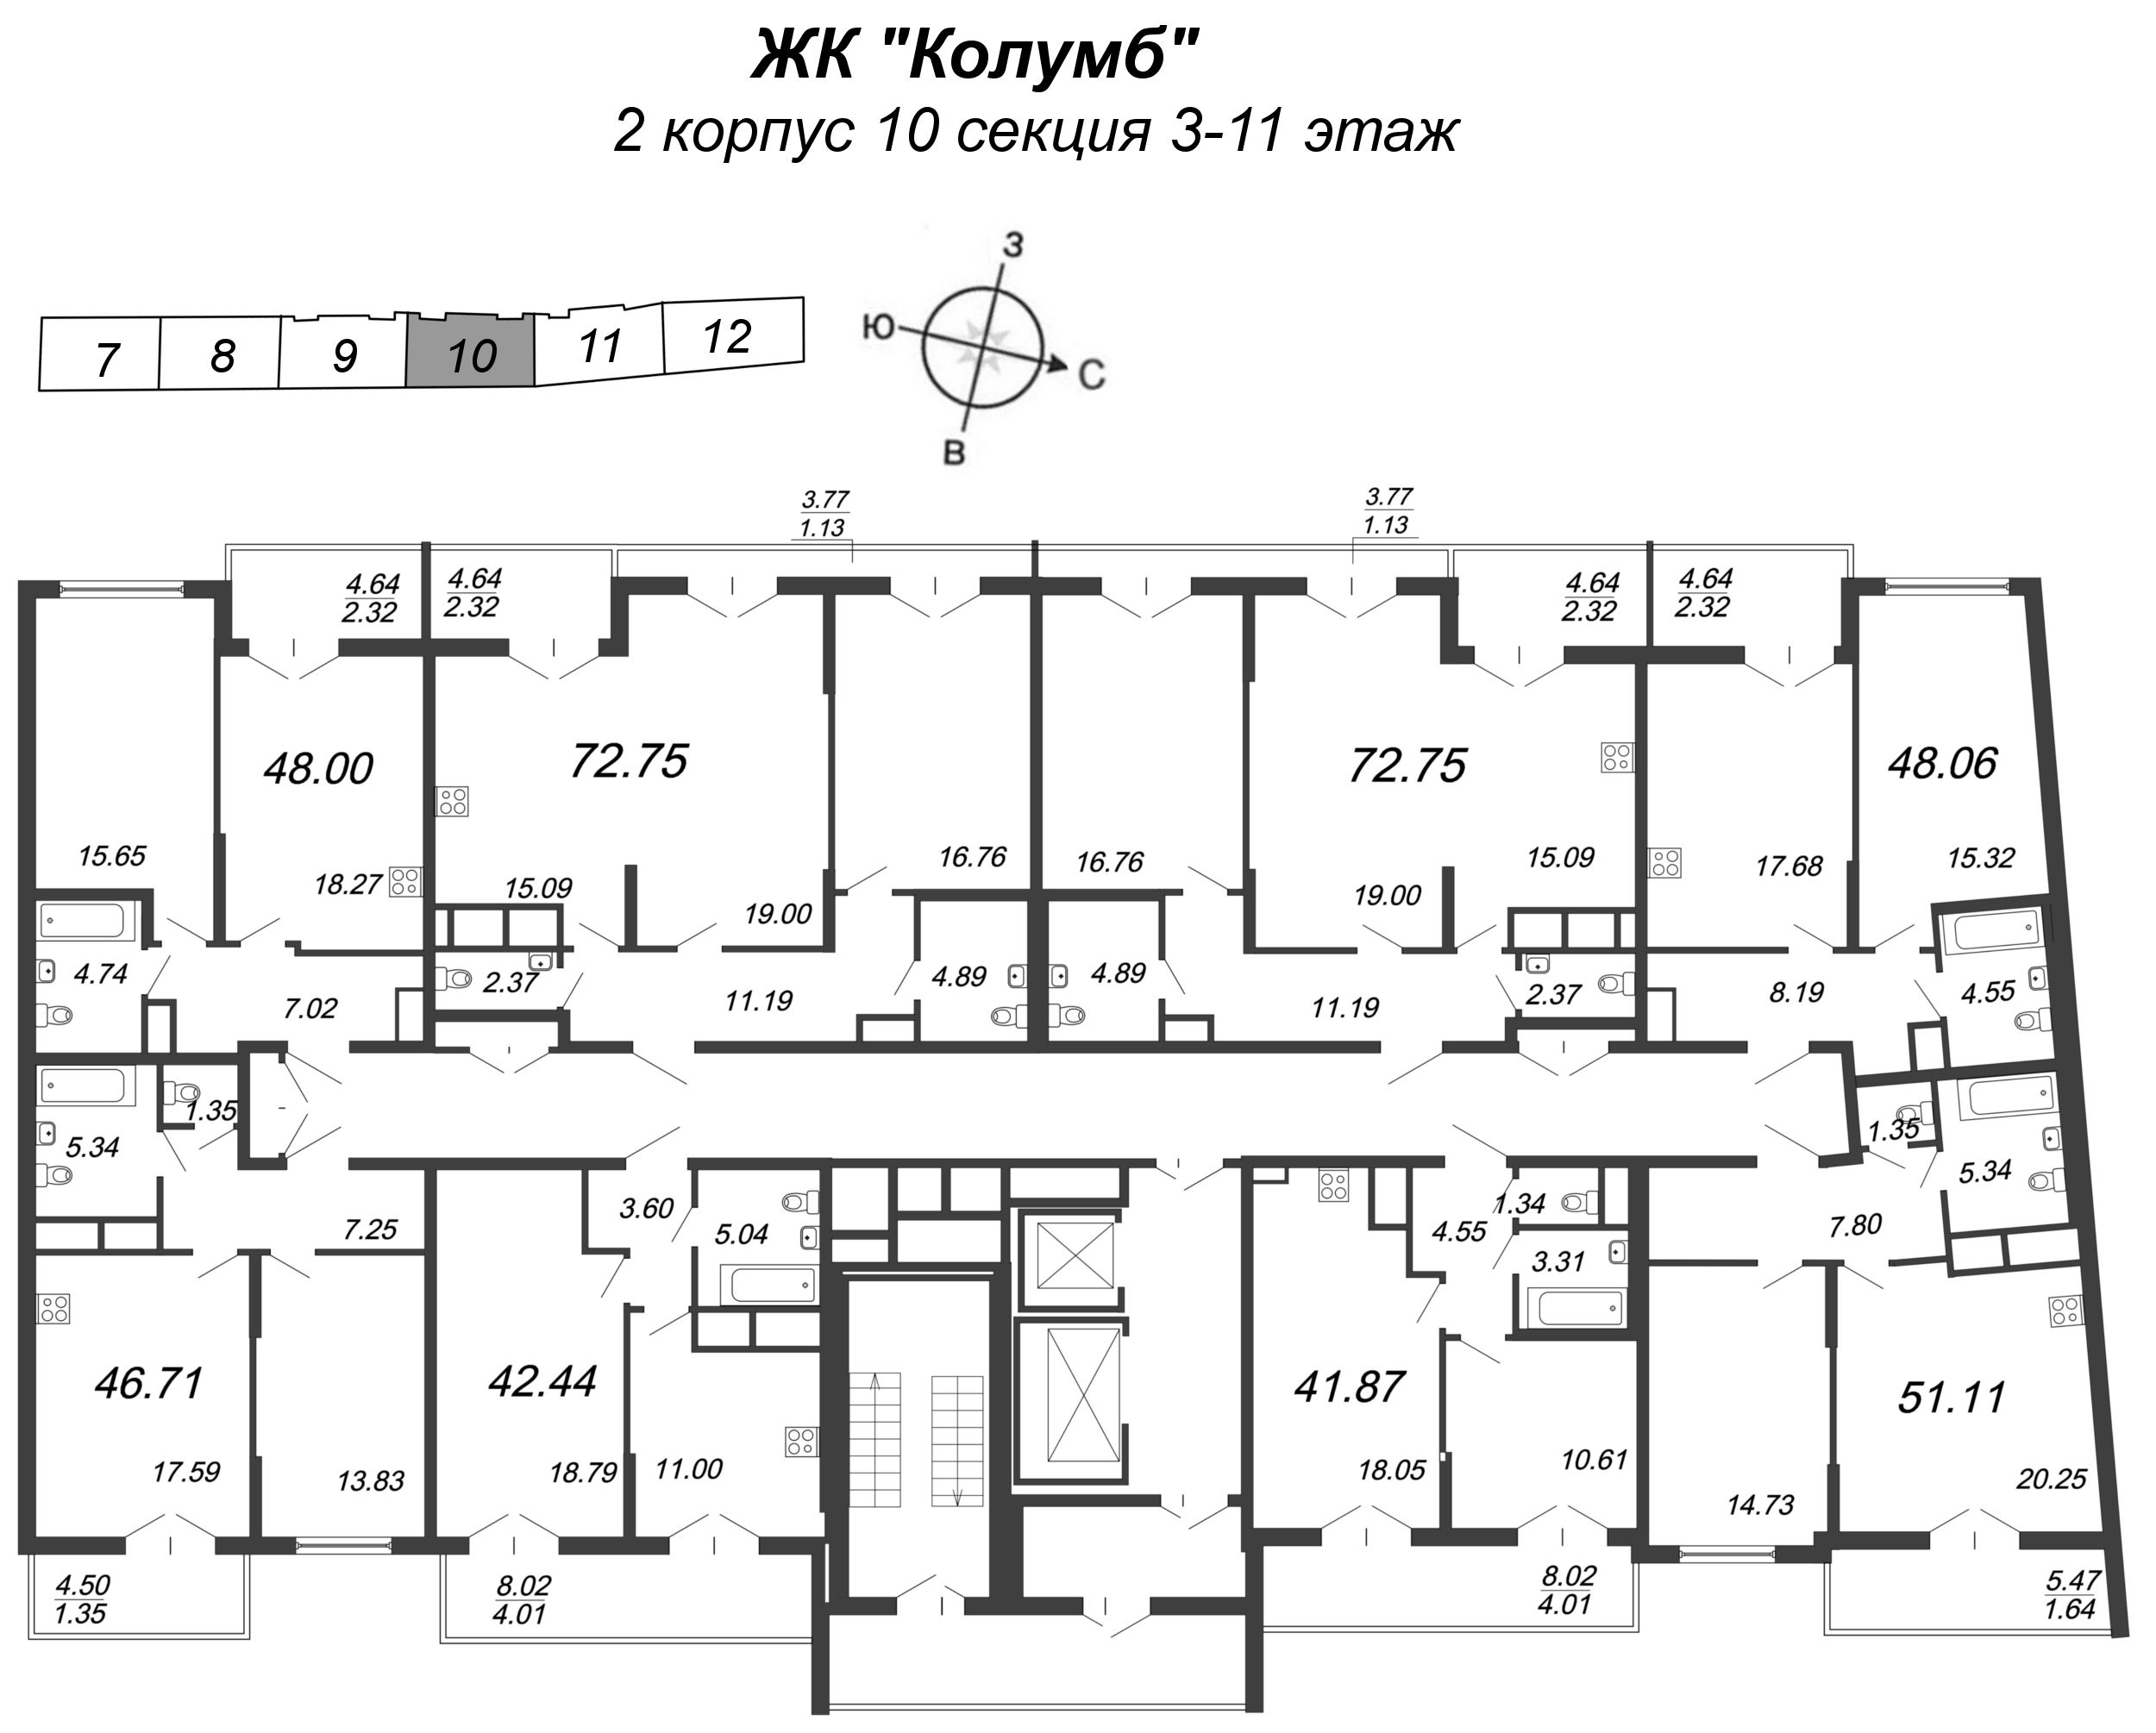 2-комнатная (Евро) квартира, 48.2 м² - планировка этажа